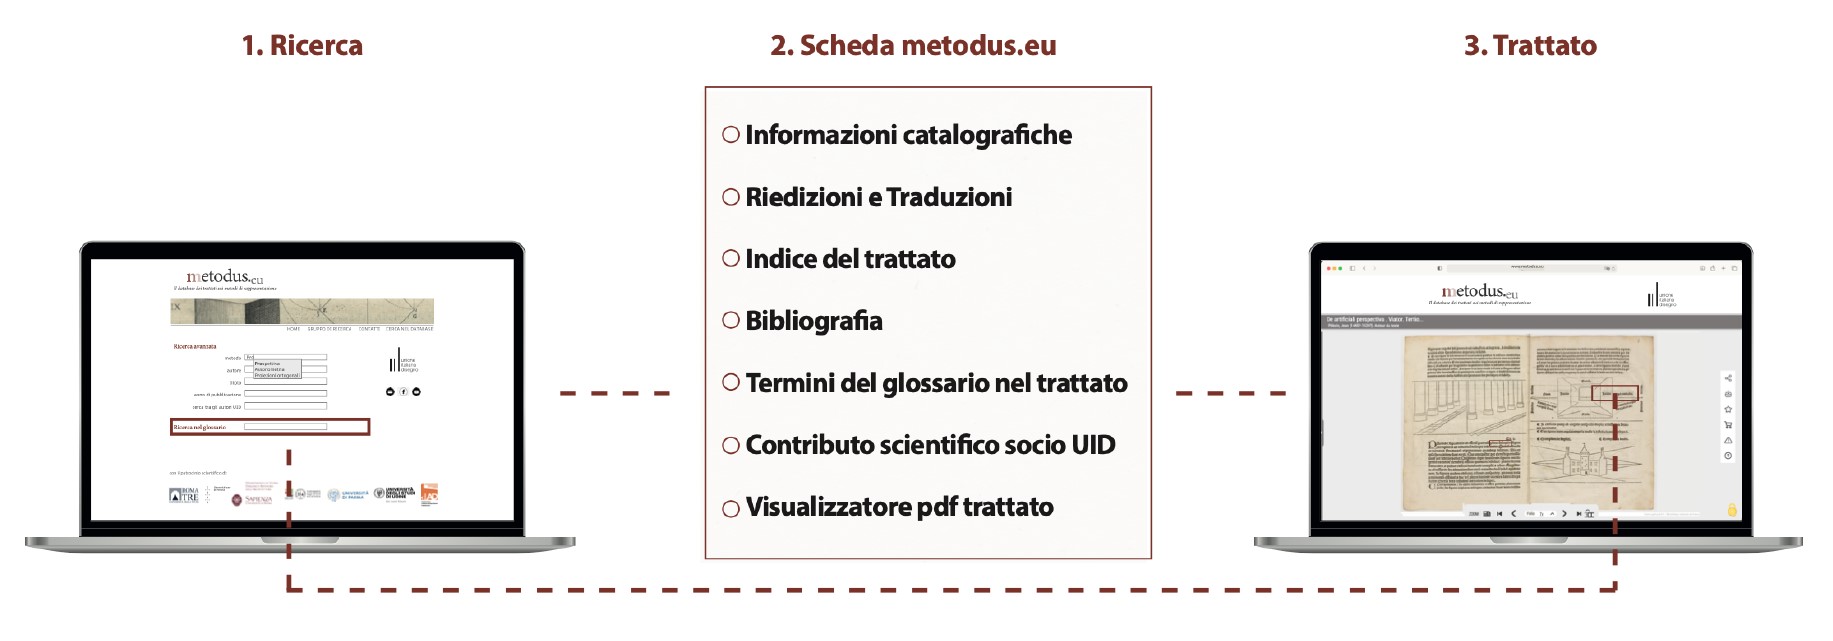 Metodus database